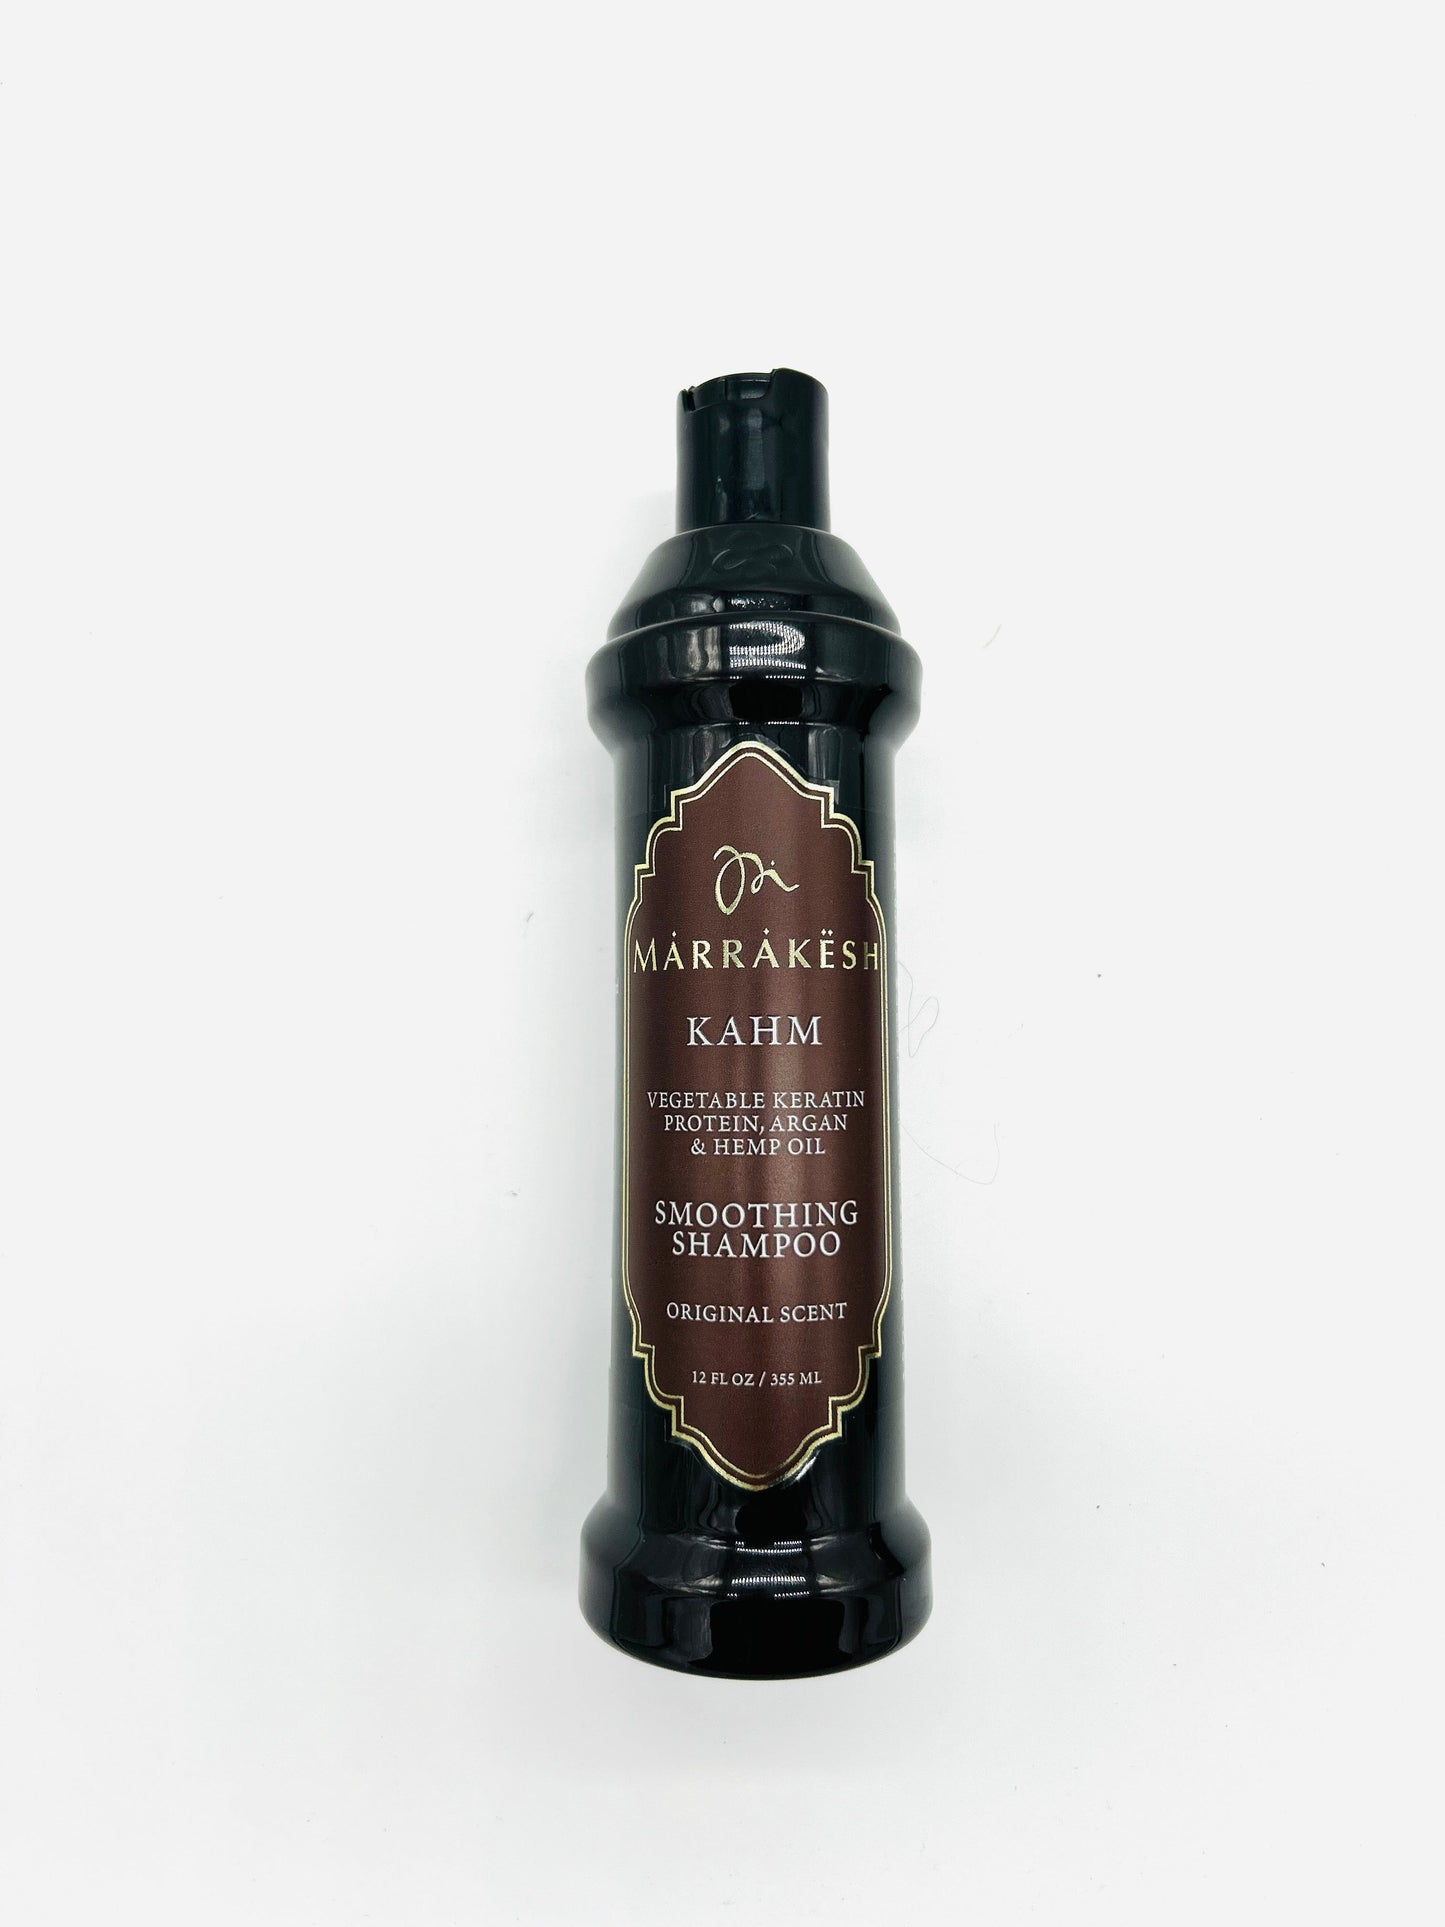 Argan Oil Shampoo Earthly Body Marrakesh KaHm Smoothing Original 12 oz Shampoo